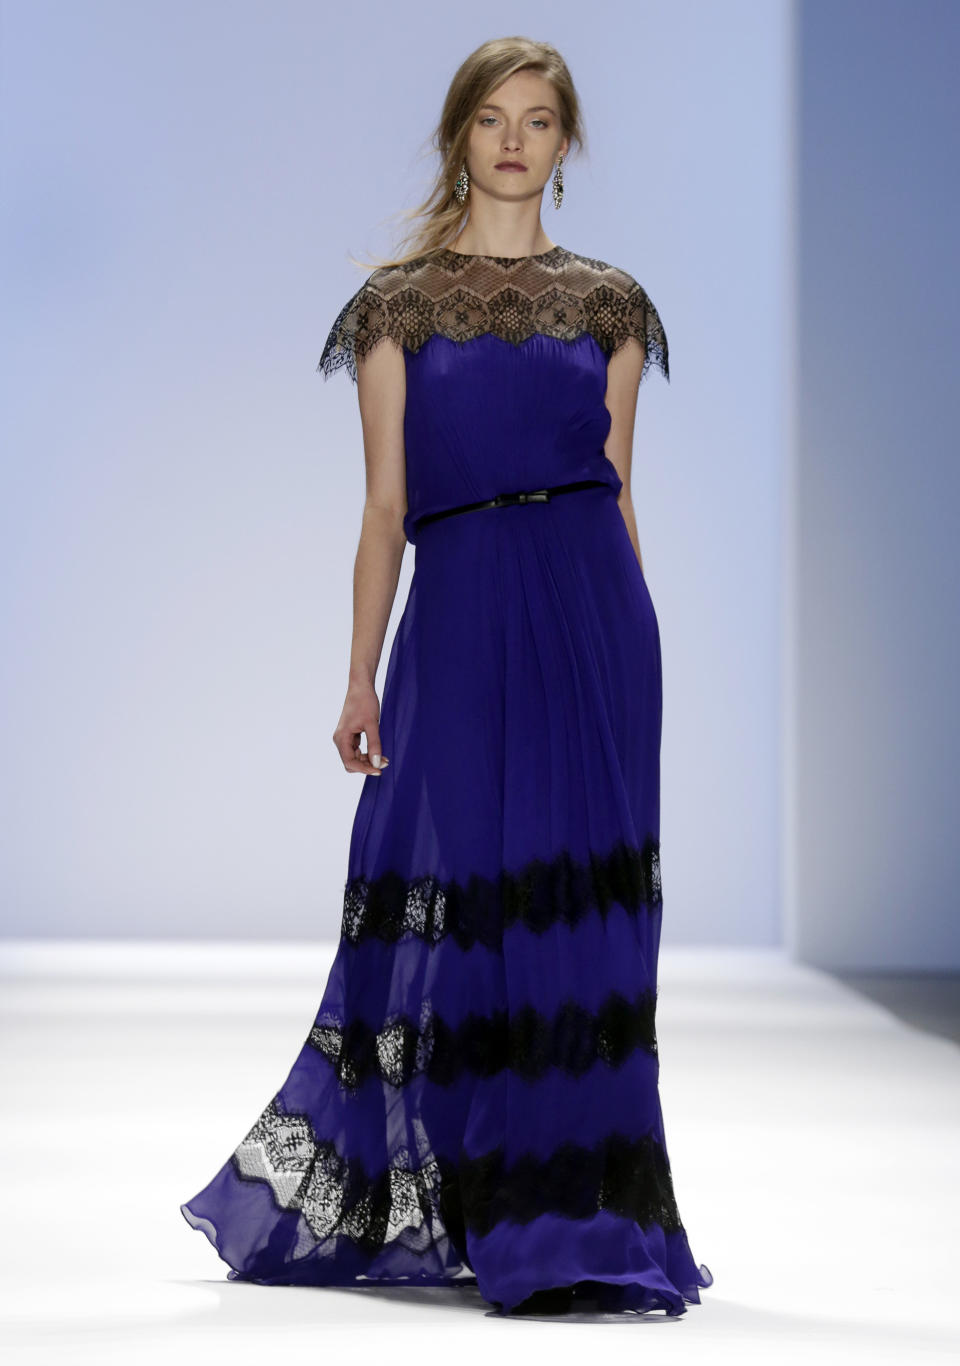 The Tadashi Shoji Fall 2013 collection is modeled during Fashion Week in New York on Thursday, Feb. 7, 2013. (AP Photo/Richard Drew)